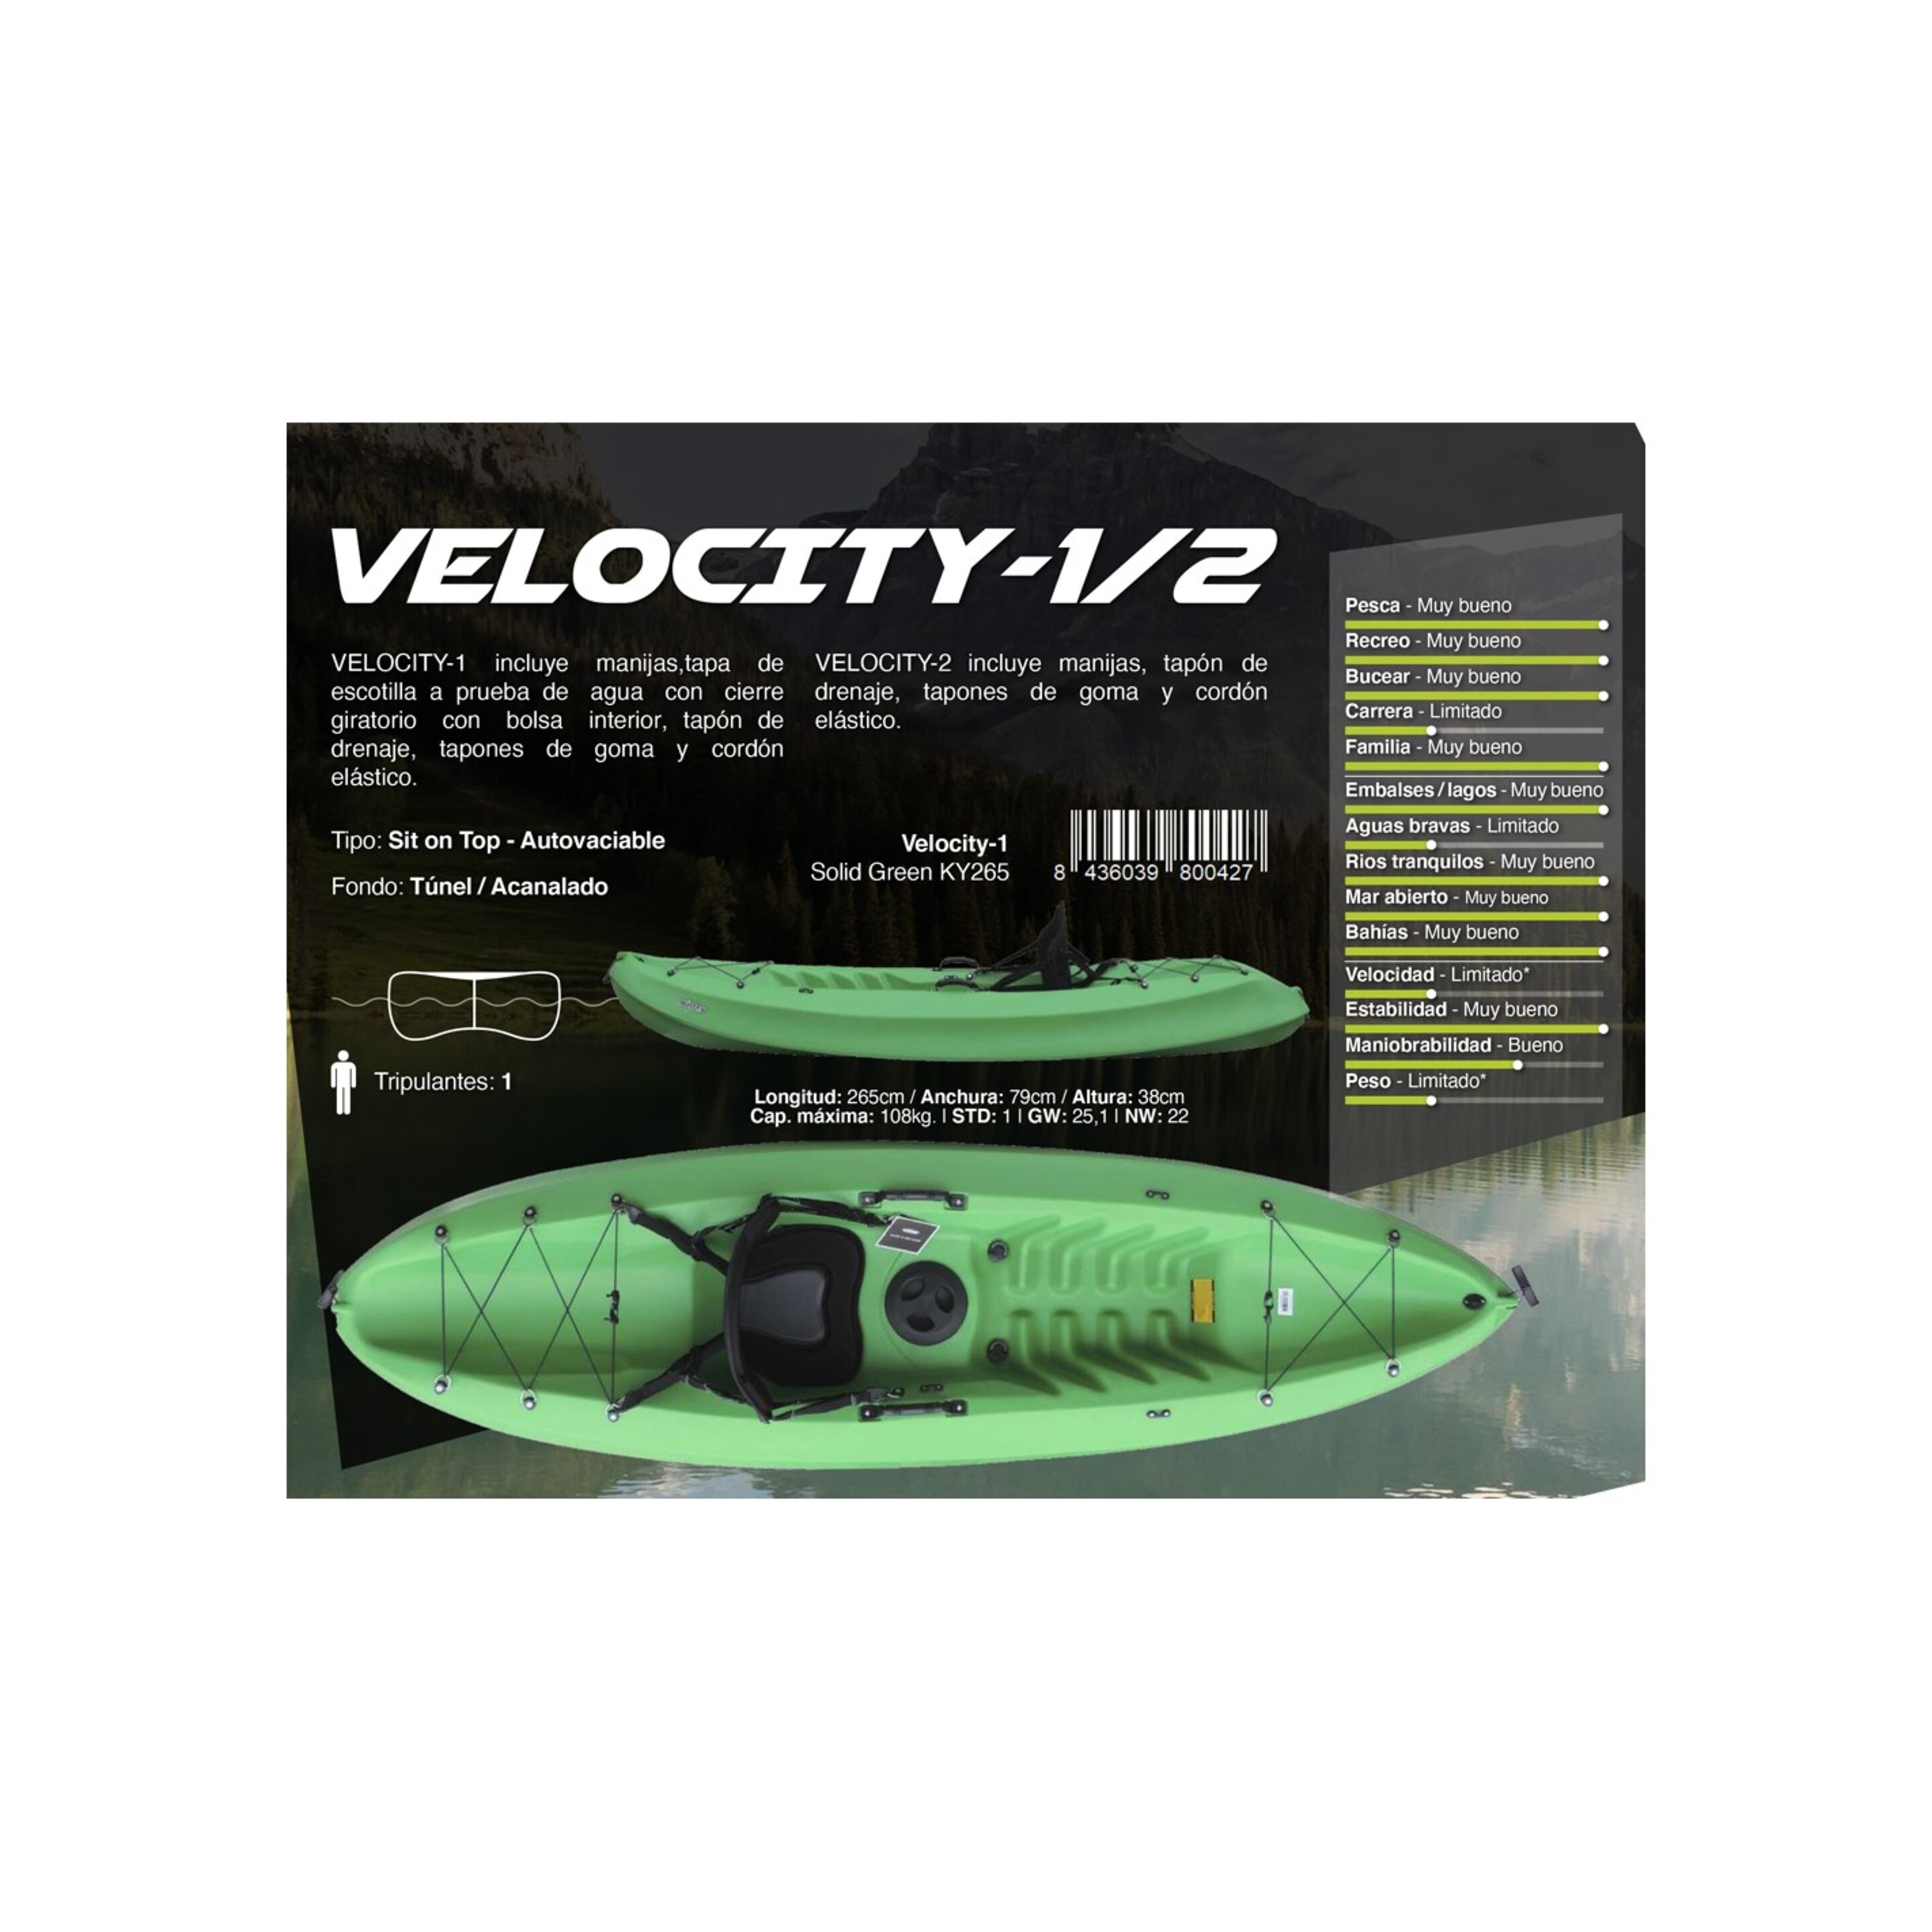 Kayak Velocity-1